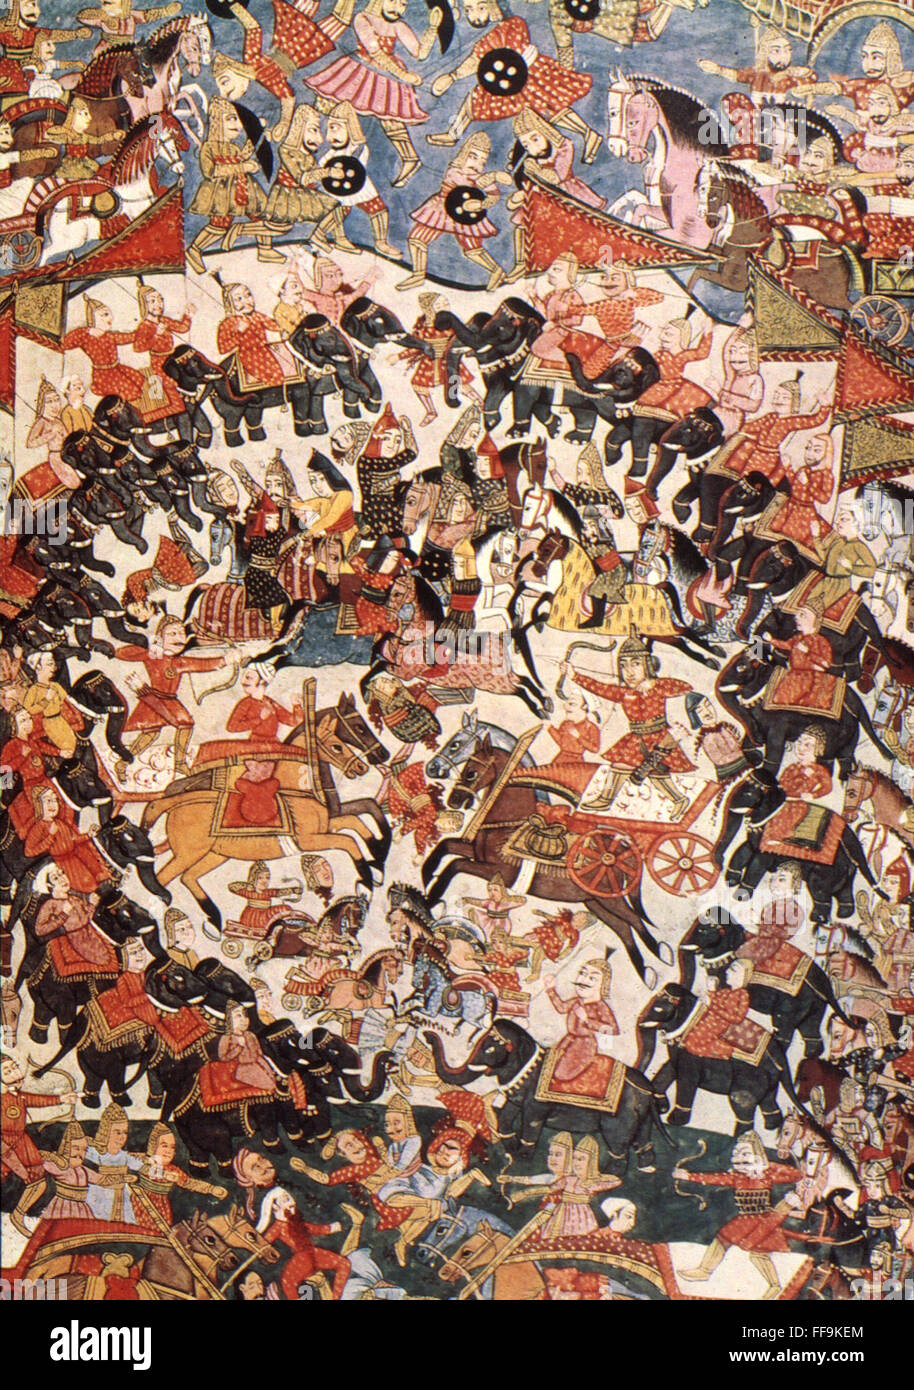 INDIA: MAHABHARATA. /nThe Mahabharata. The armies of the Kauravas and Pandavas clashing, 9th century B.C. Indian painting. Stock Photo